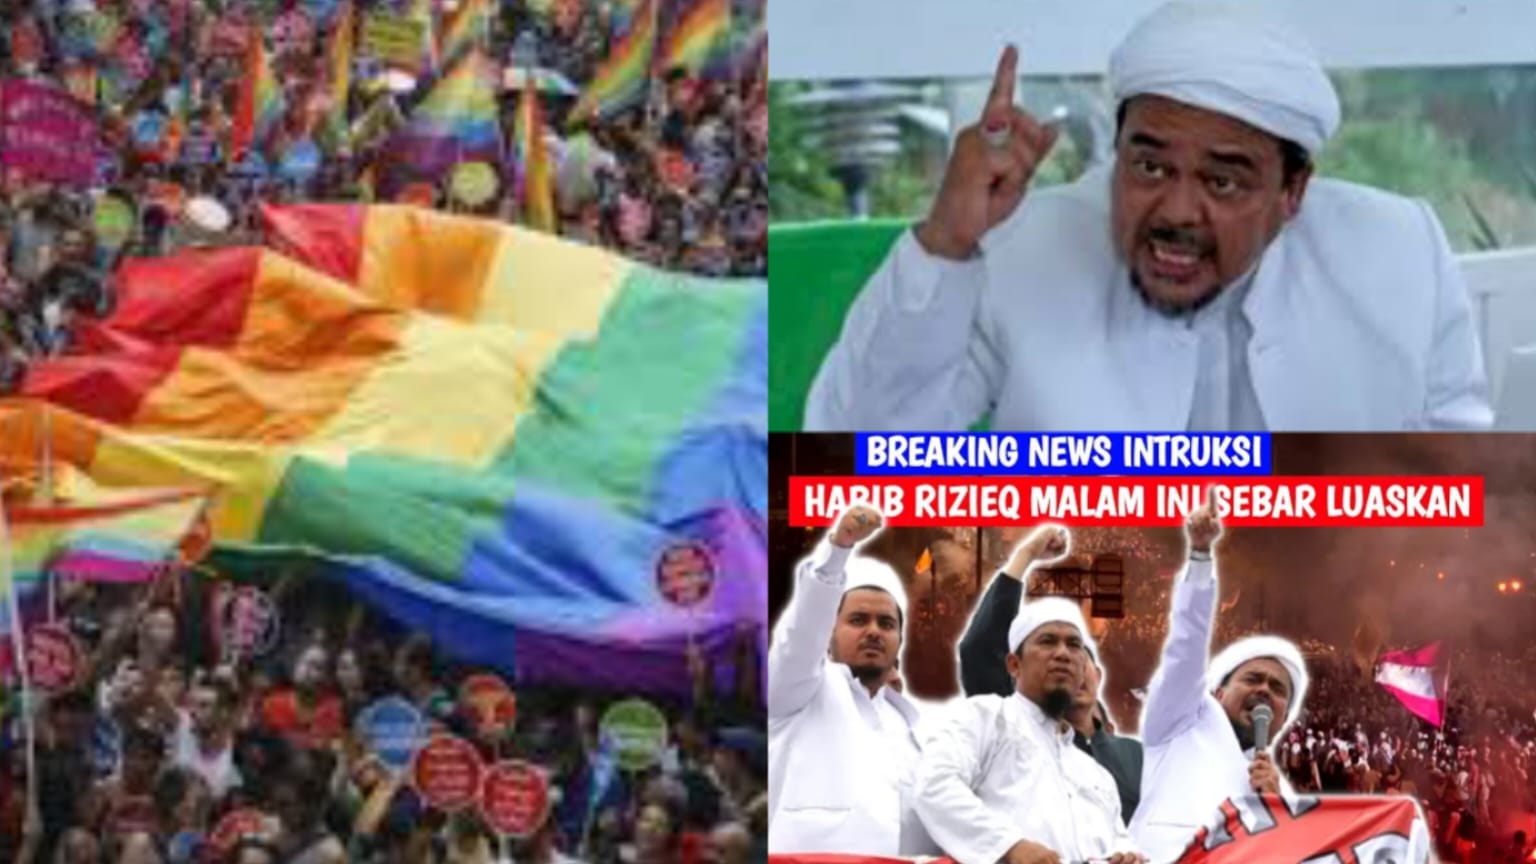 GAWAT! Indonesia Jadi Target Sasaran Pengembangan LGBT, Disokong Dana Ratusan Miliar, Habib Rizieq: Musnahkan!